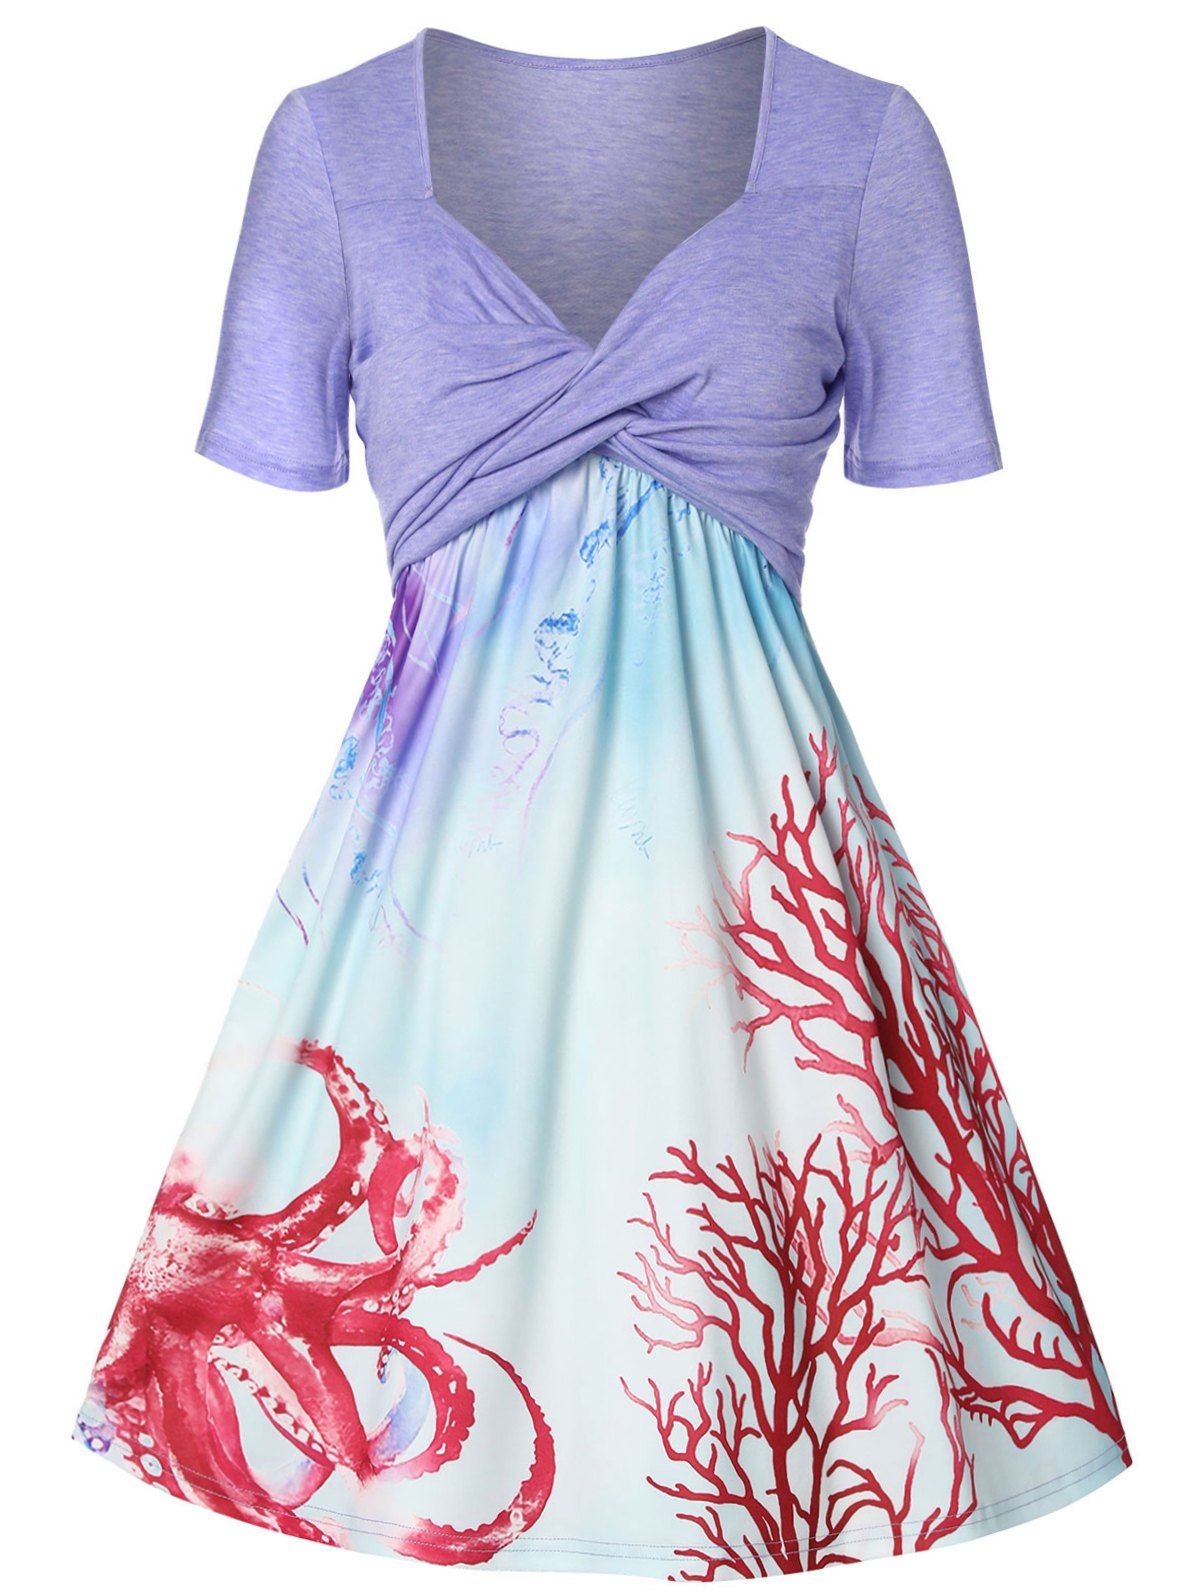 Marine Life Twist 2 in 1 Mini Dress - multicolor M